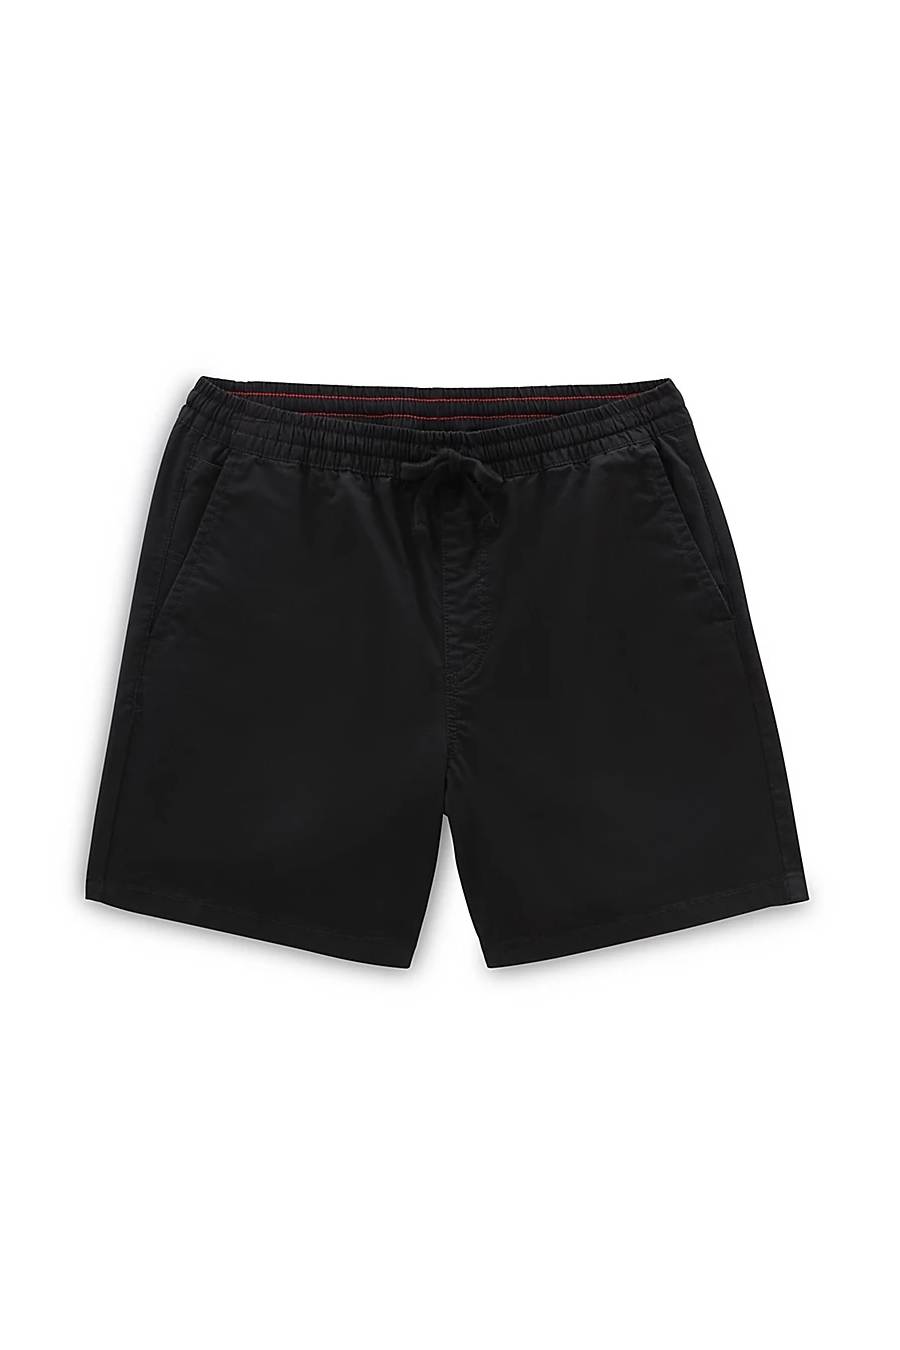 Pantalones cortos Vans Mn Range Relaxed Elastic VN0A5FKDBLK1